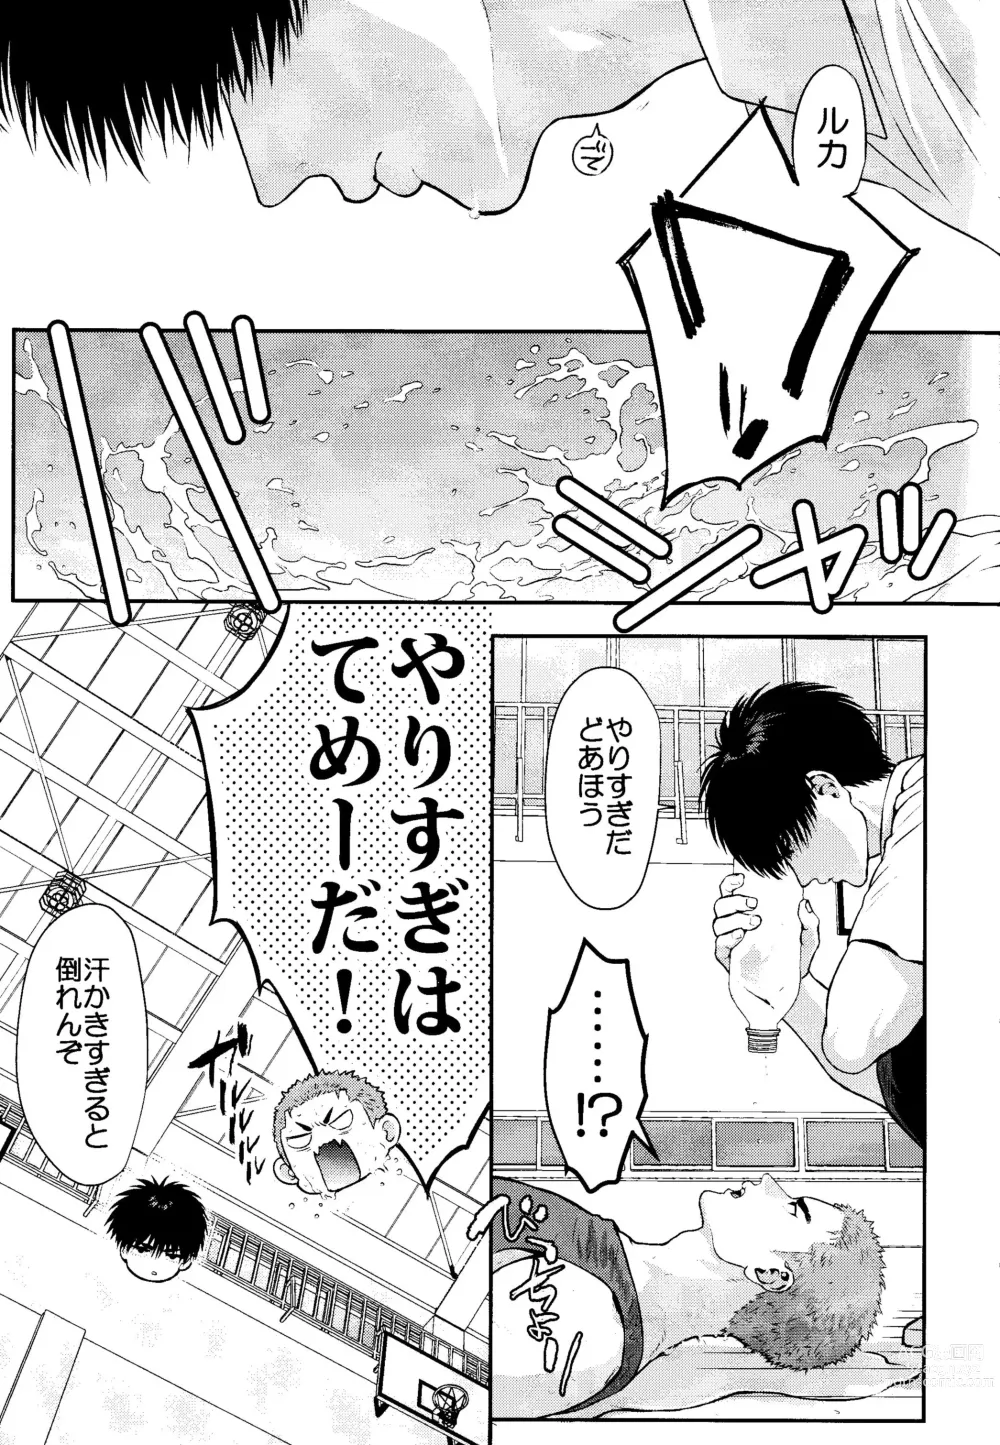 Page 9 of doujinshi Omae ni Muchuu